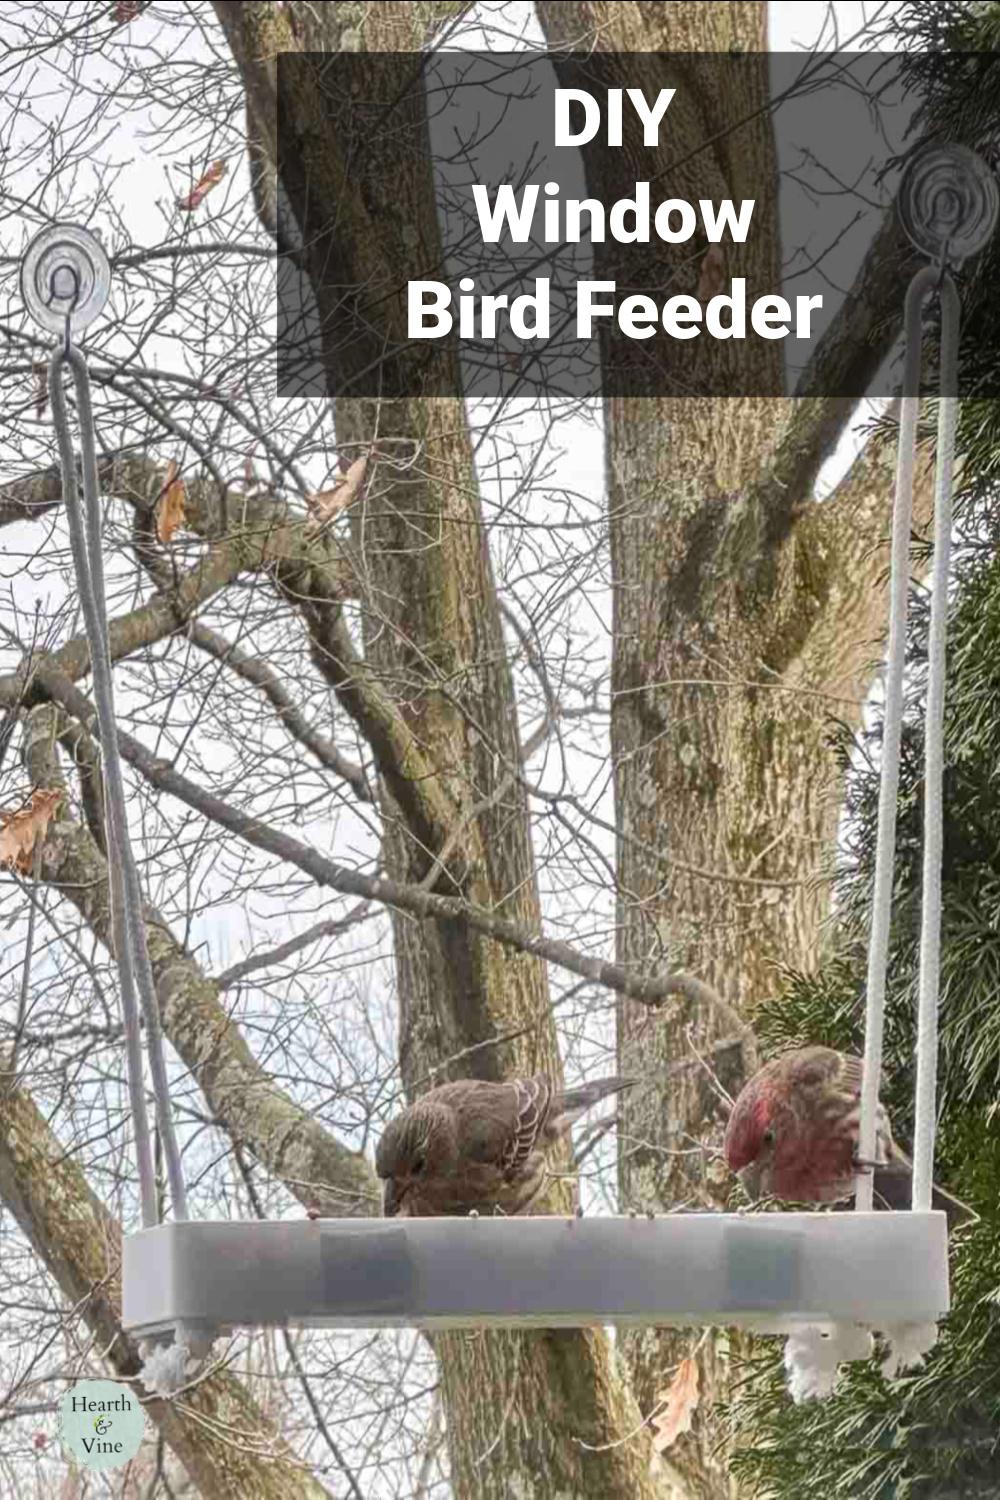 DIY window bird feeder with two purple finch birds eating birdseed.